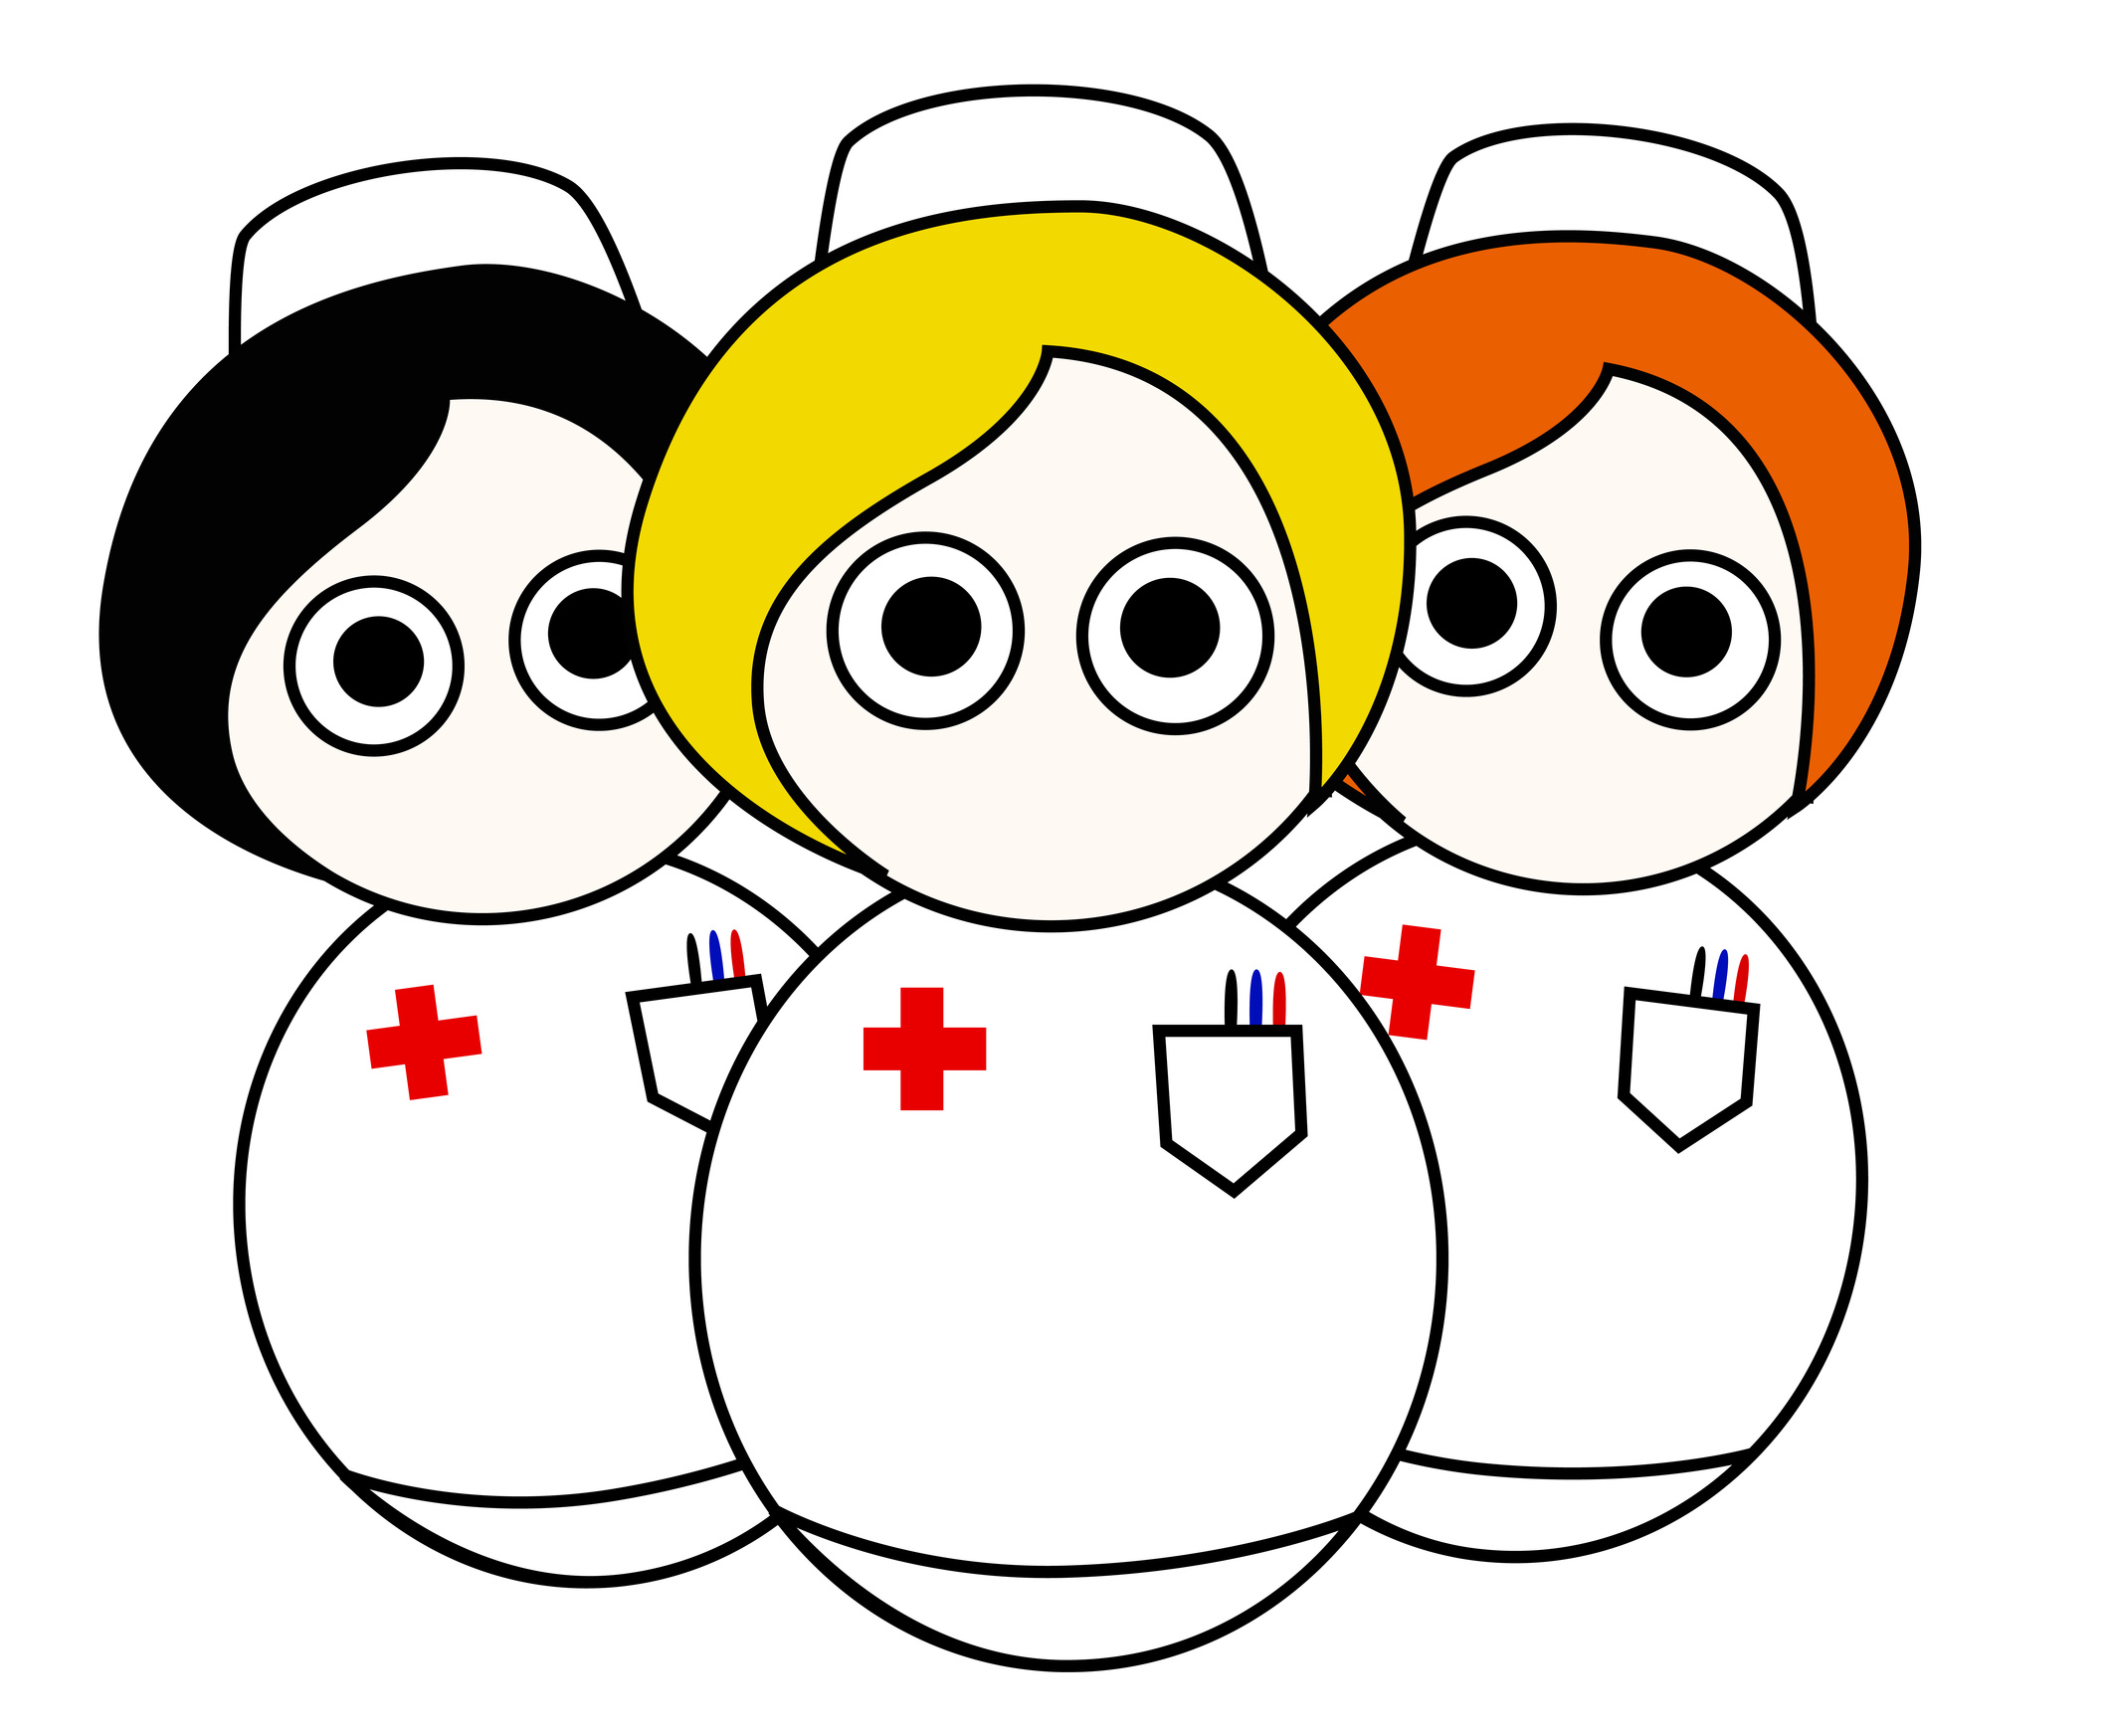 nurse cartoon image